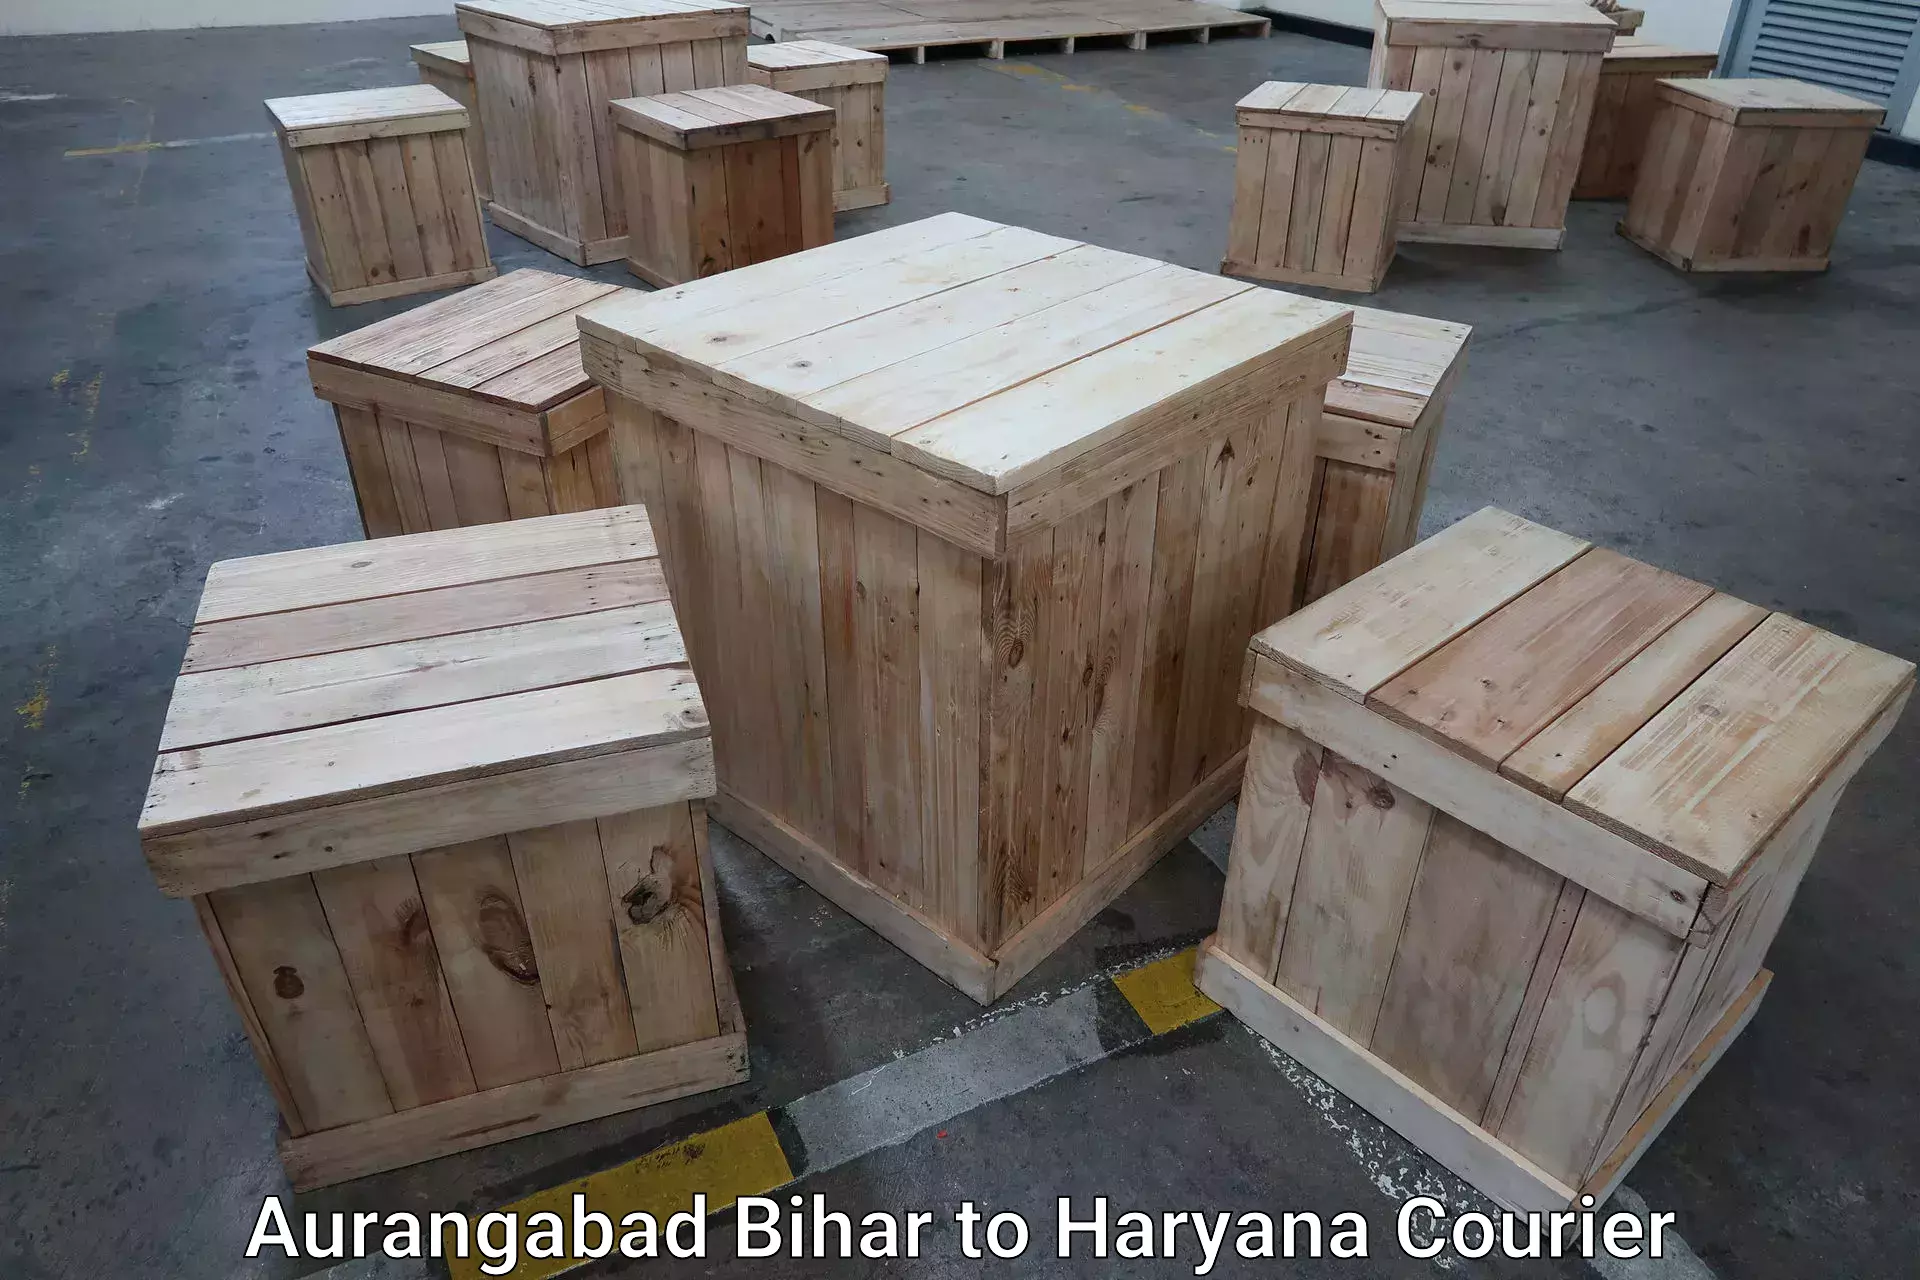 Personal effects shipping in Aurangabad Bihar to Loharu